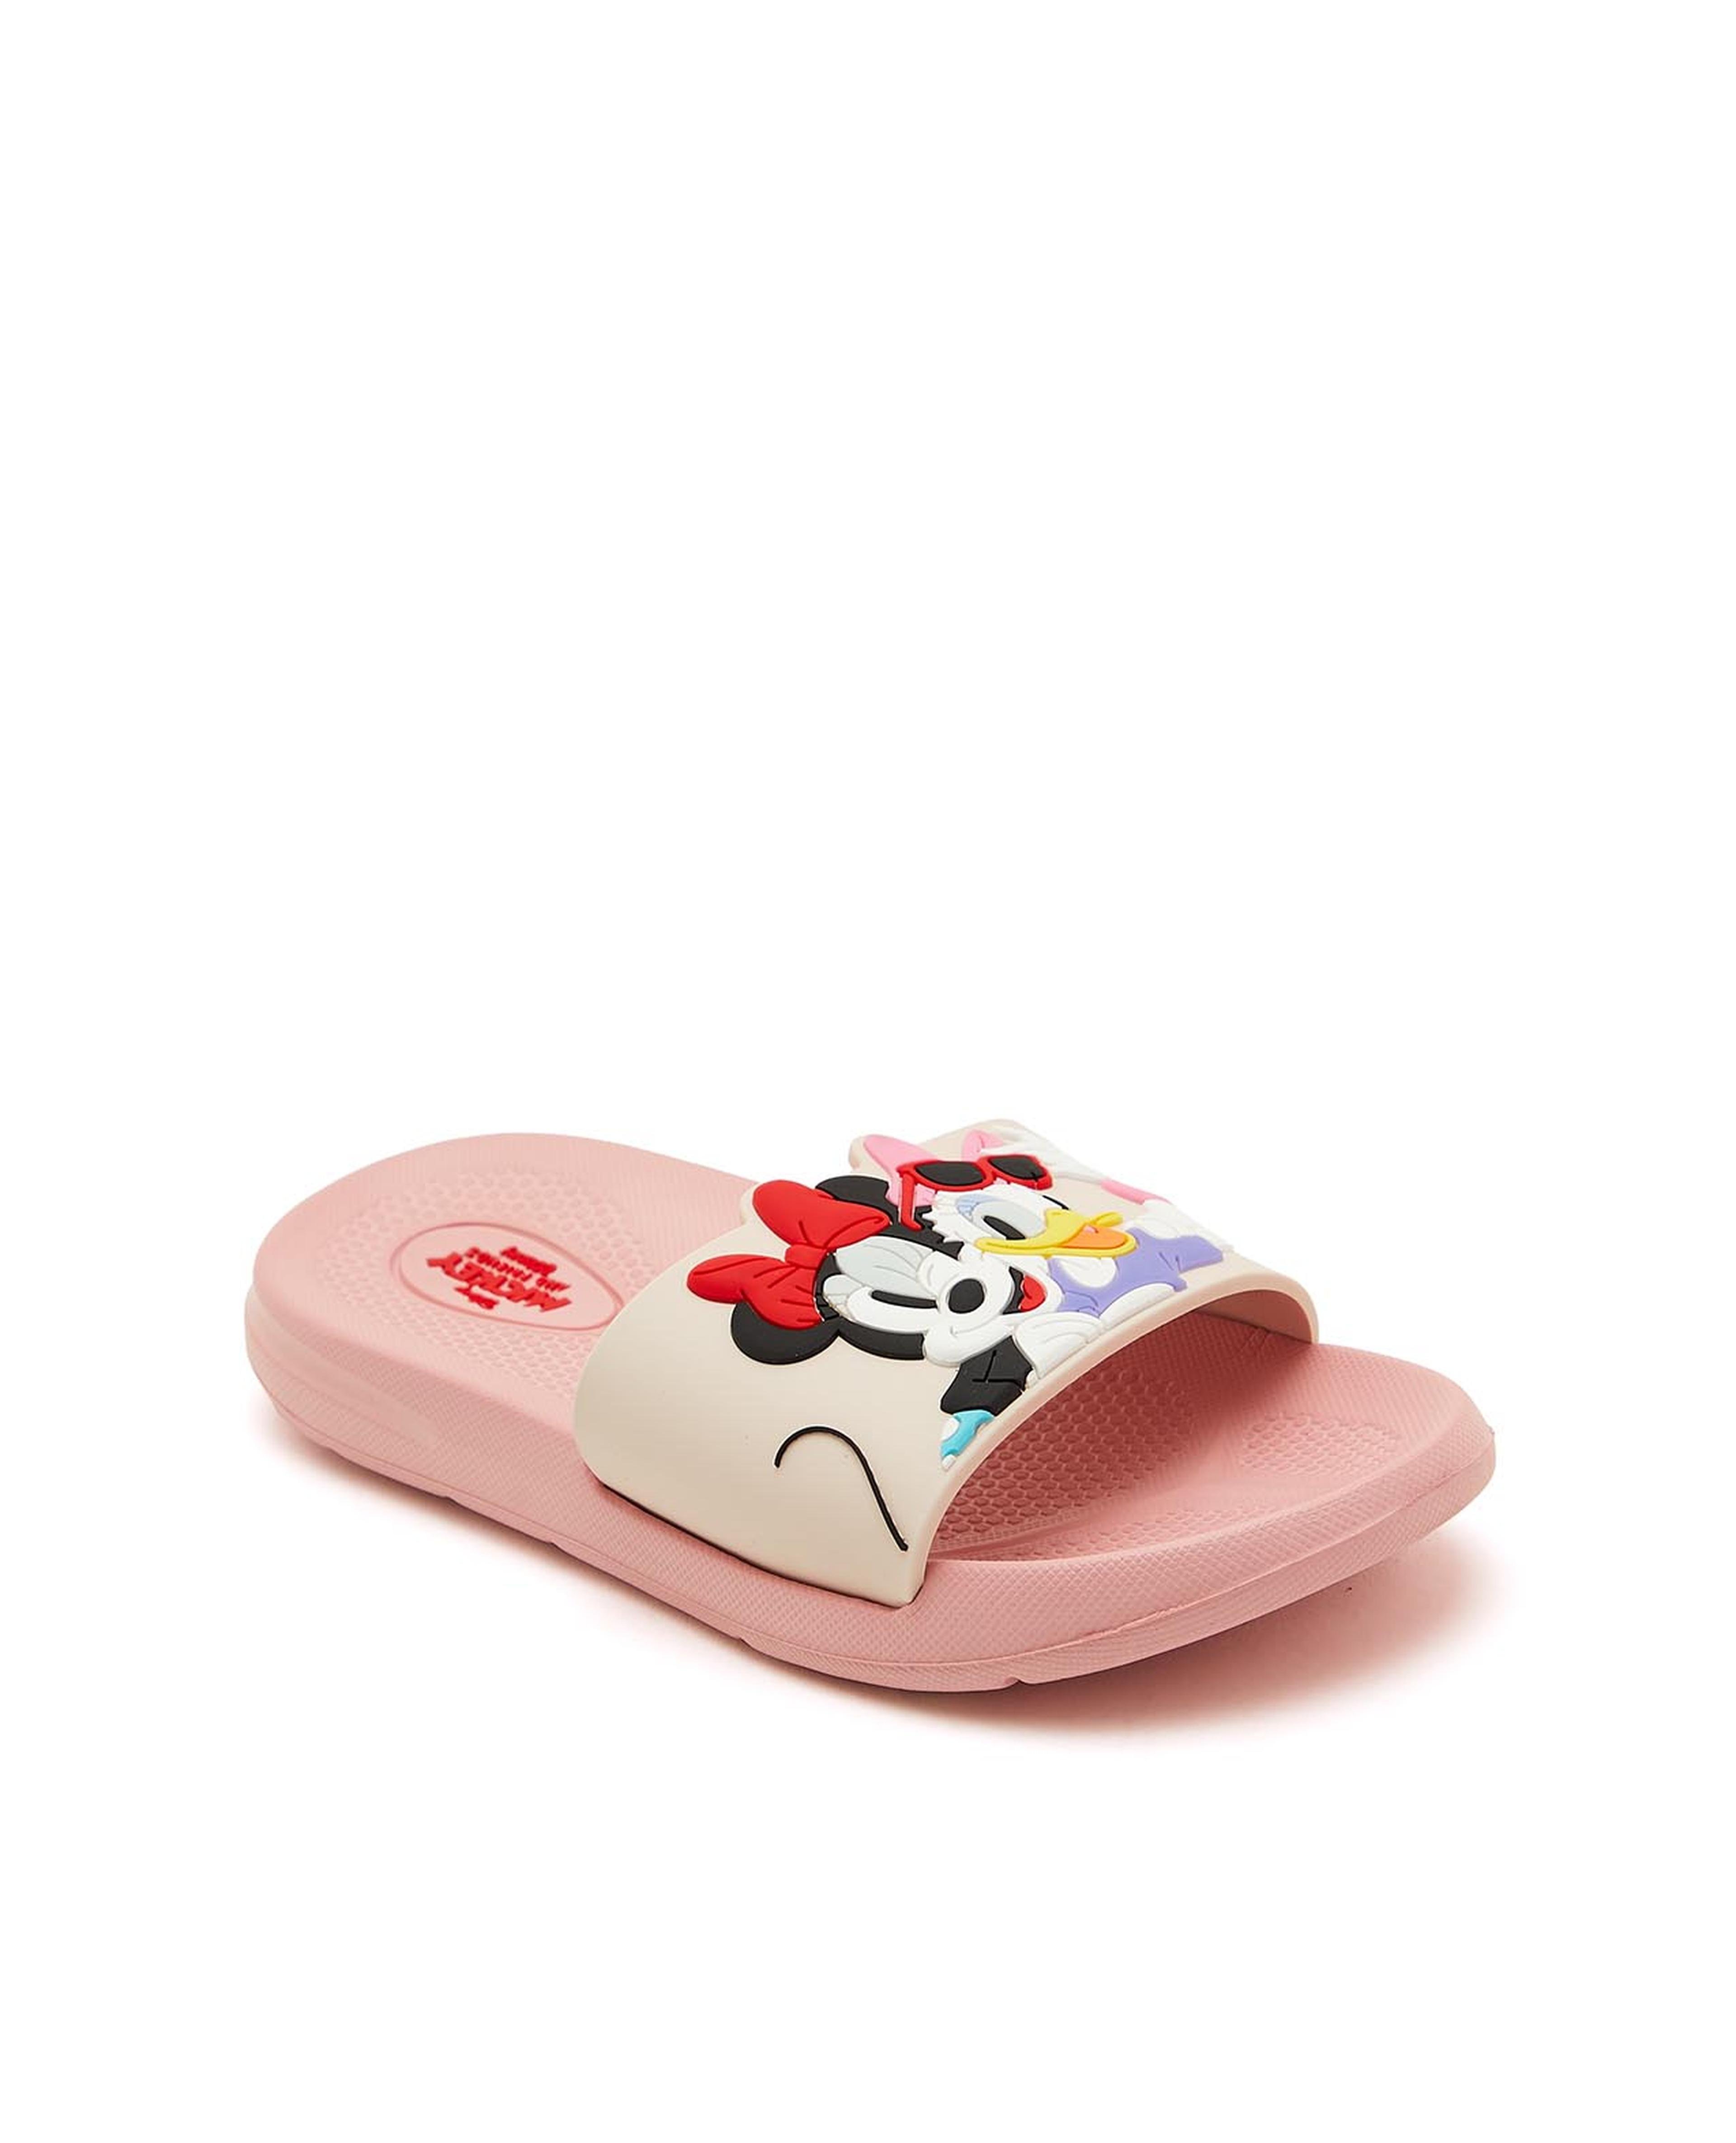 Minnie Mouse & Daisy Duck Slides